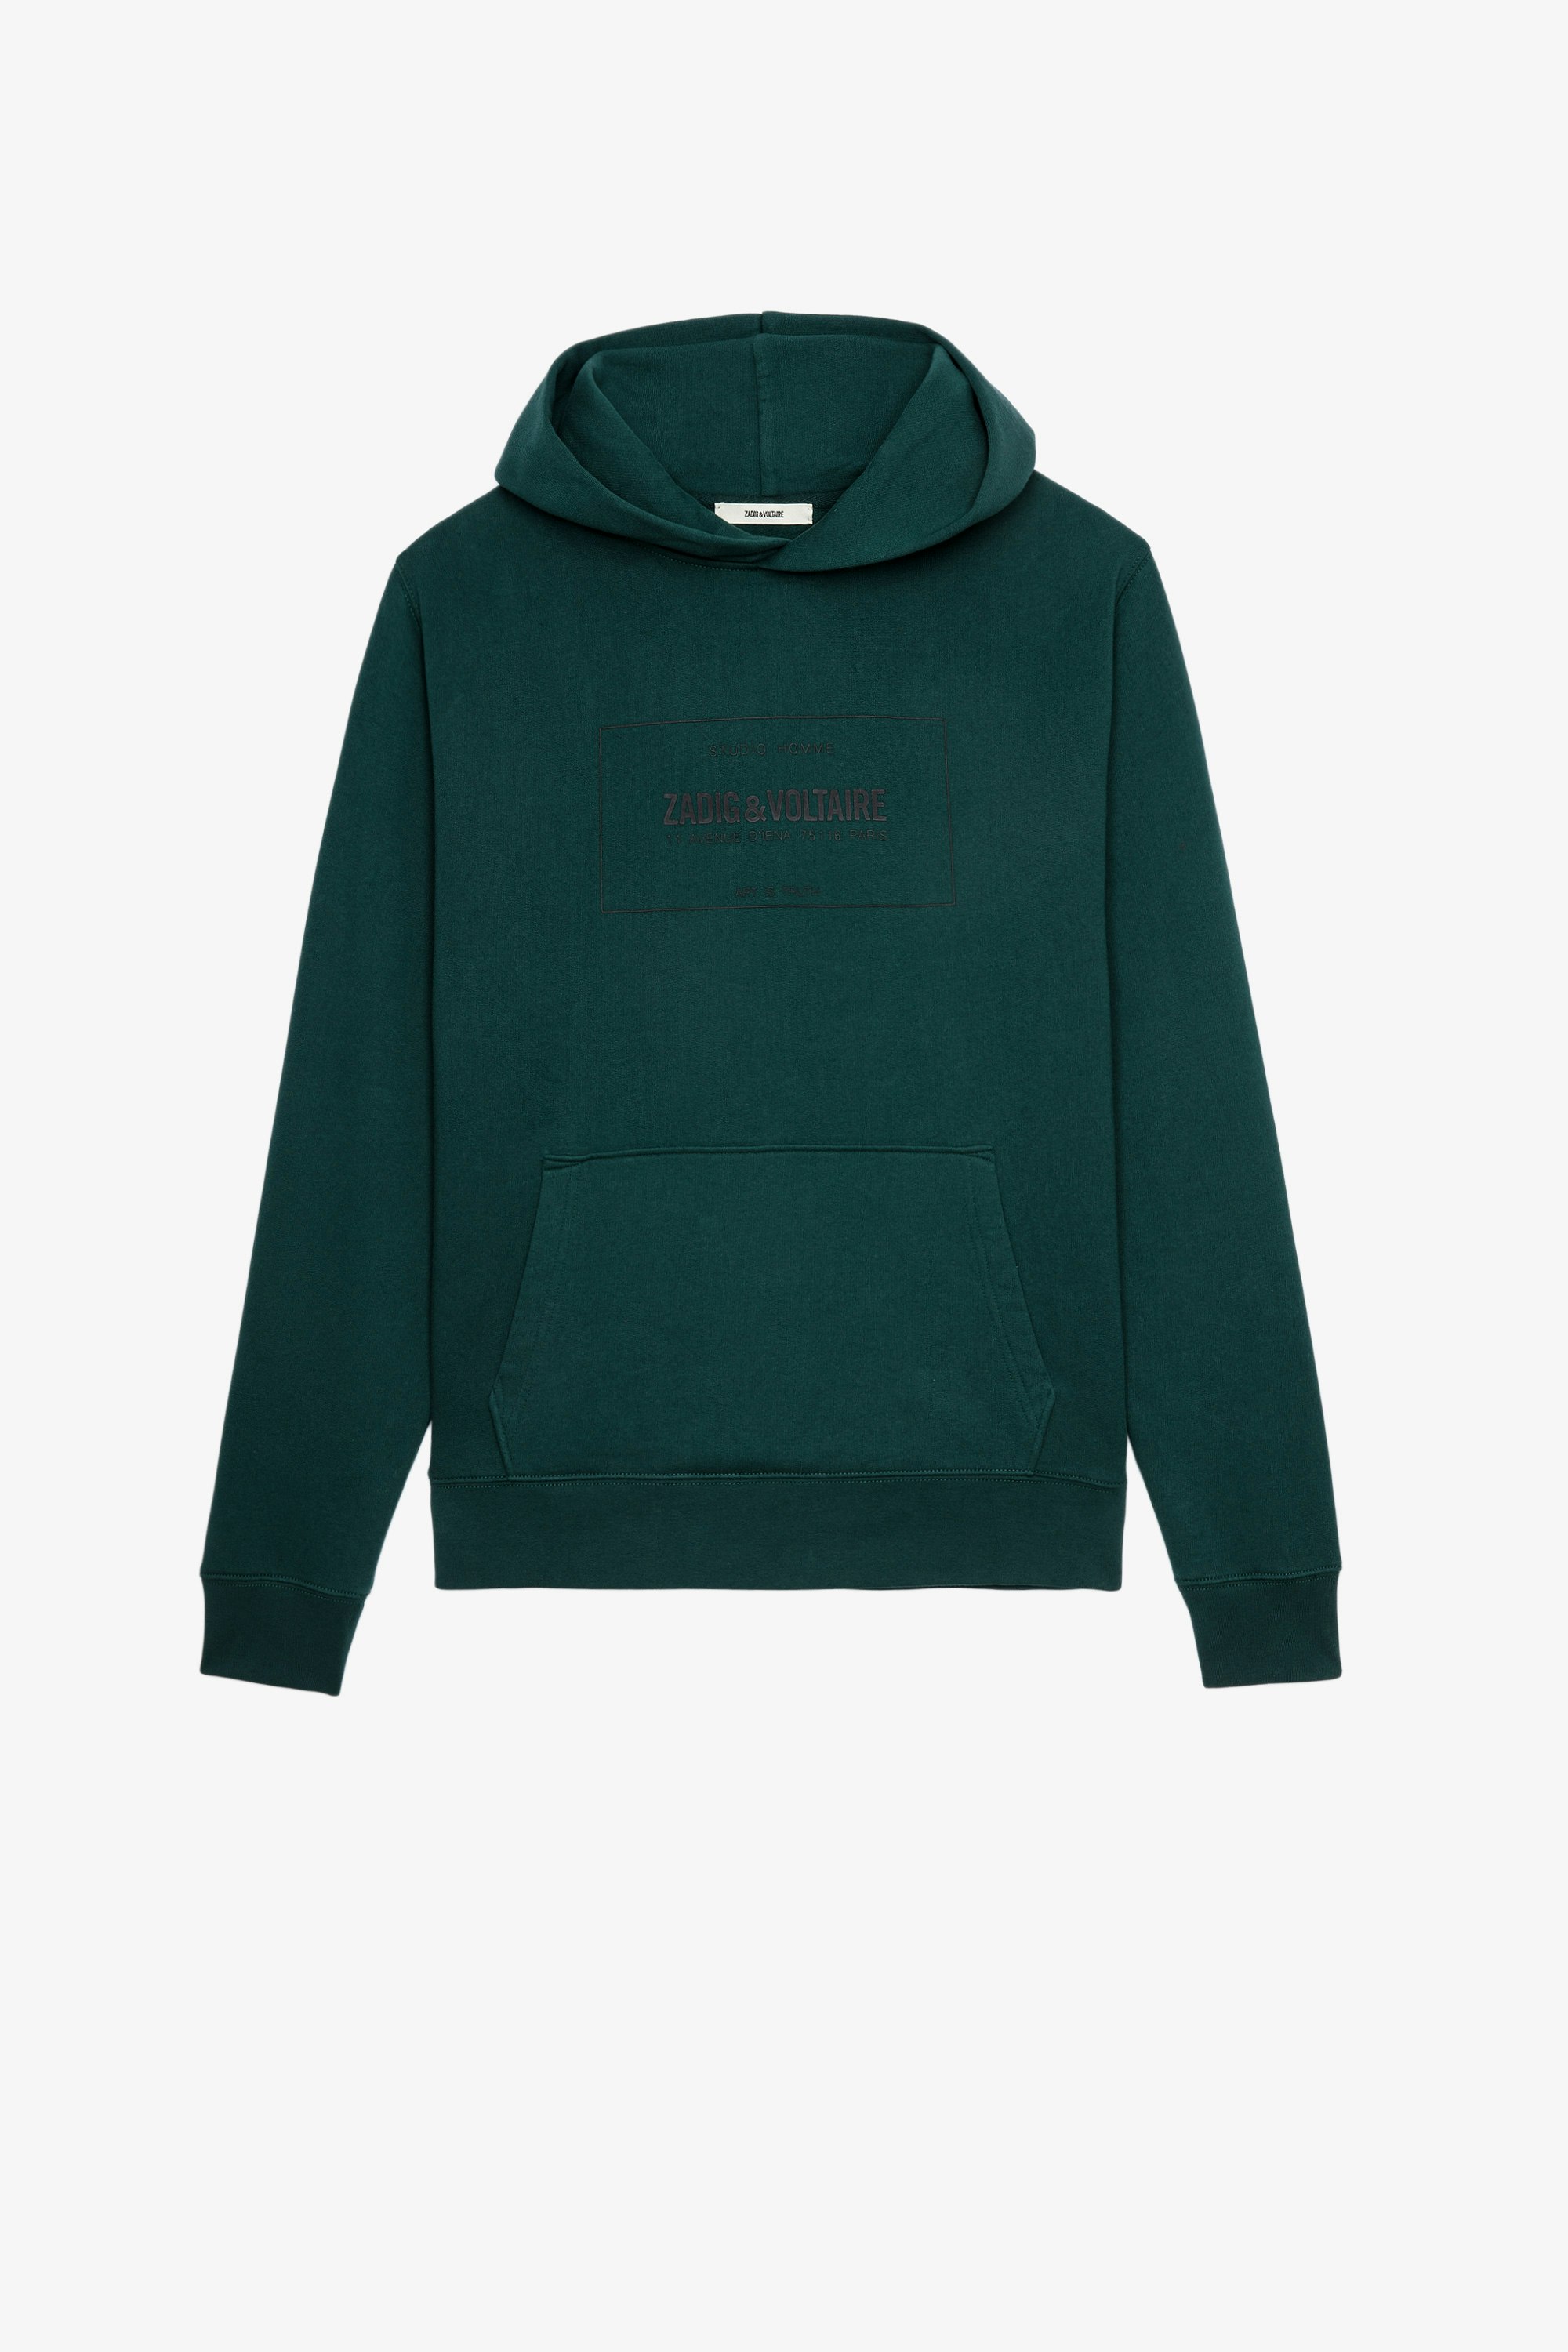 Sanchi Insignia Sweatshirt Men’s green cotton hoodie